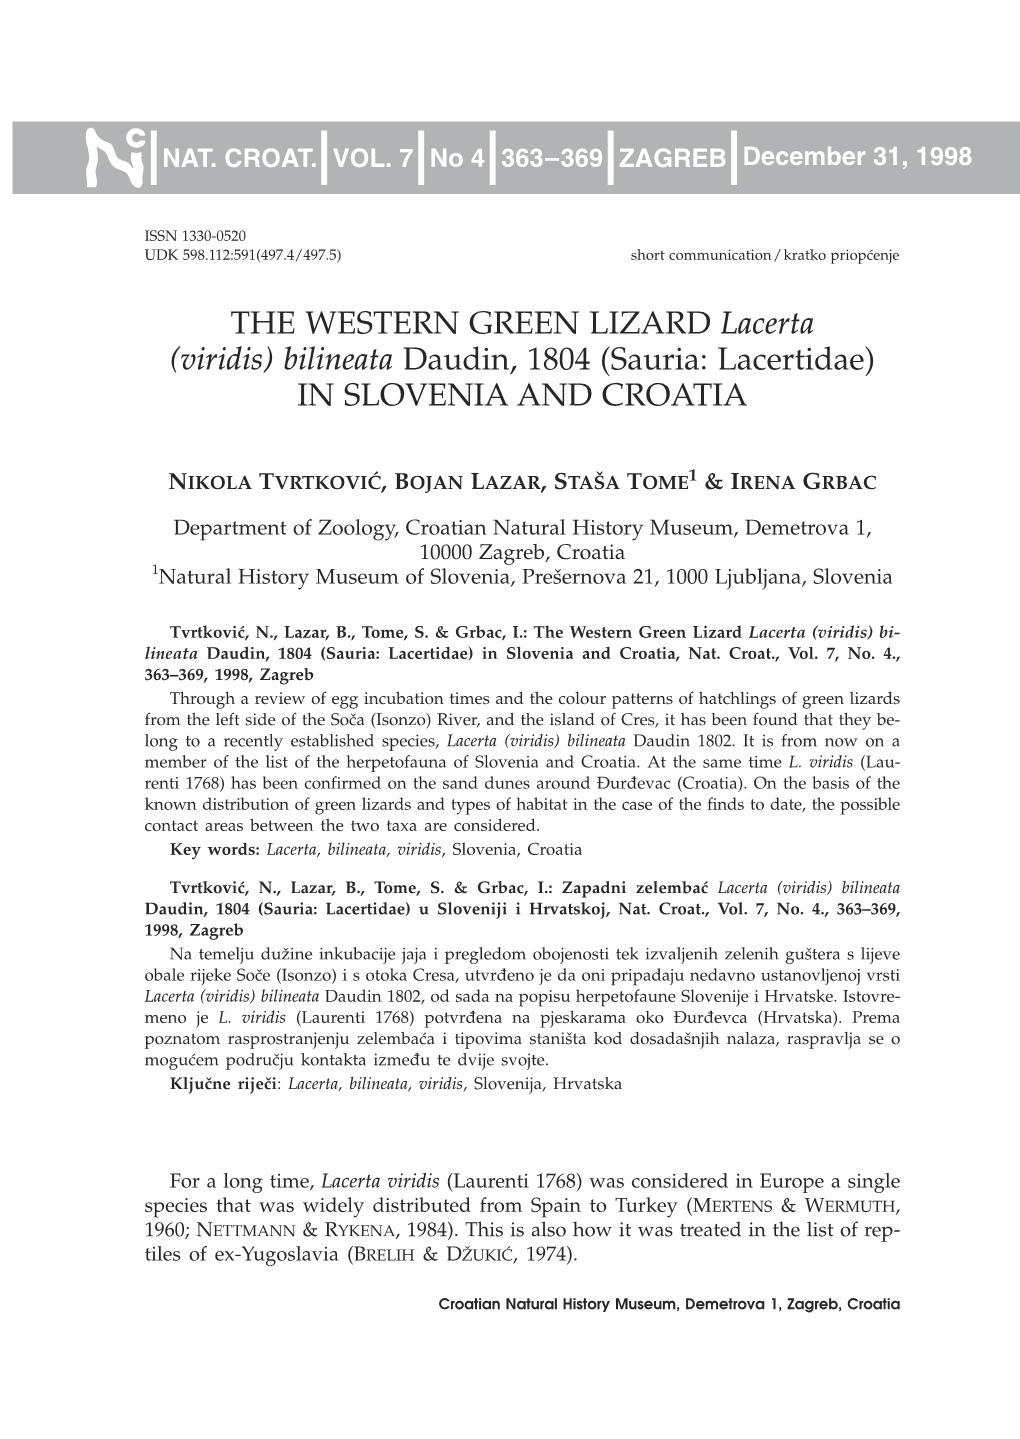 THE WESTERN GREEN LIZARD Lacerta (Viridis) Bilineata Daudin, 1804 (Sauria: Lacertidae) in SLOVENIA and CROATIA